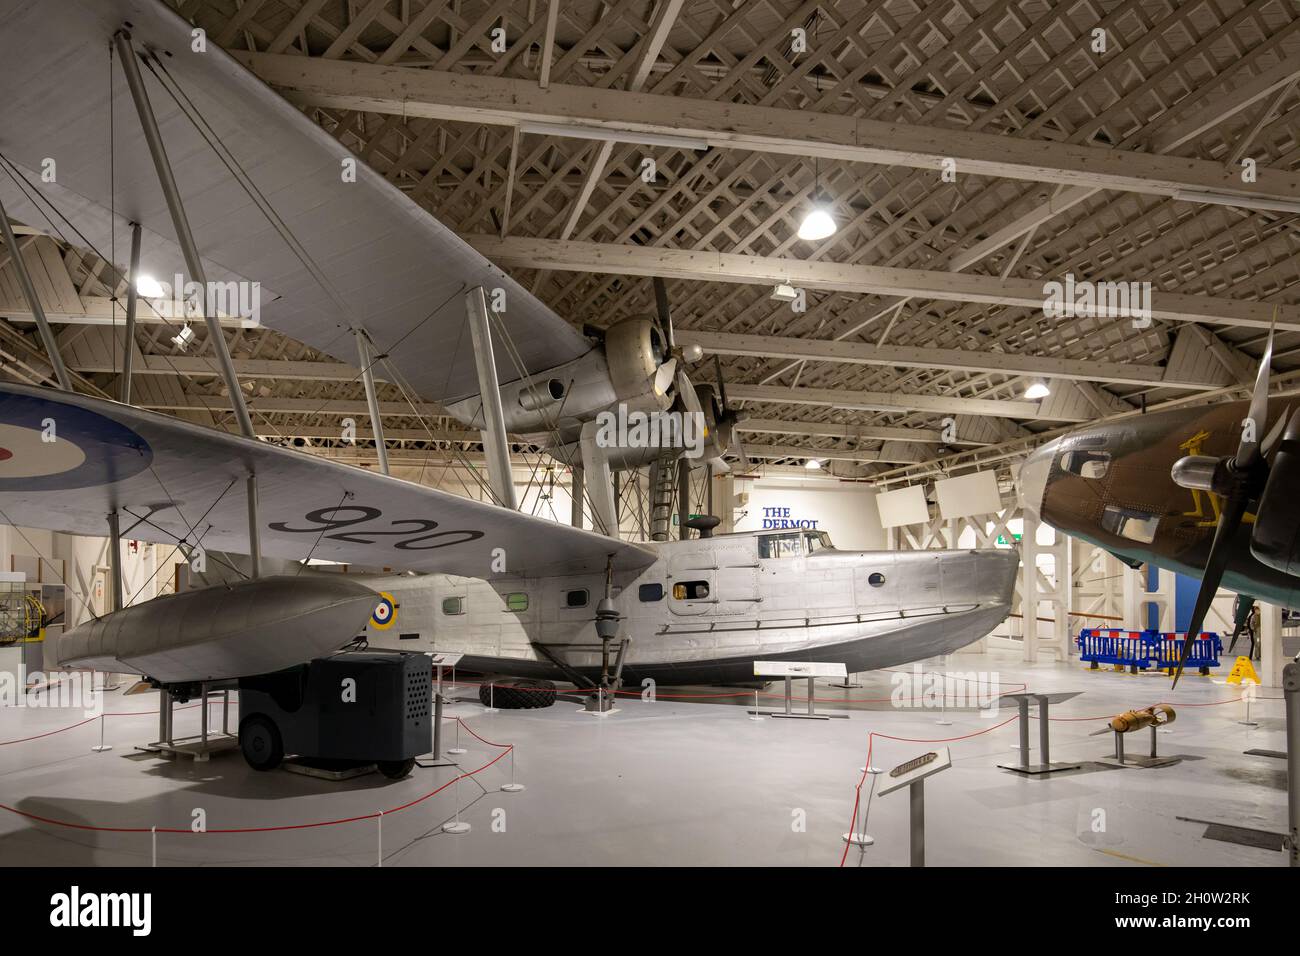 Royal Air Force Museum, London Stock Photo